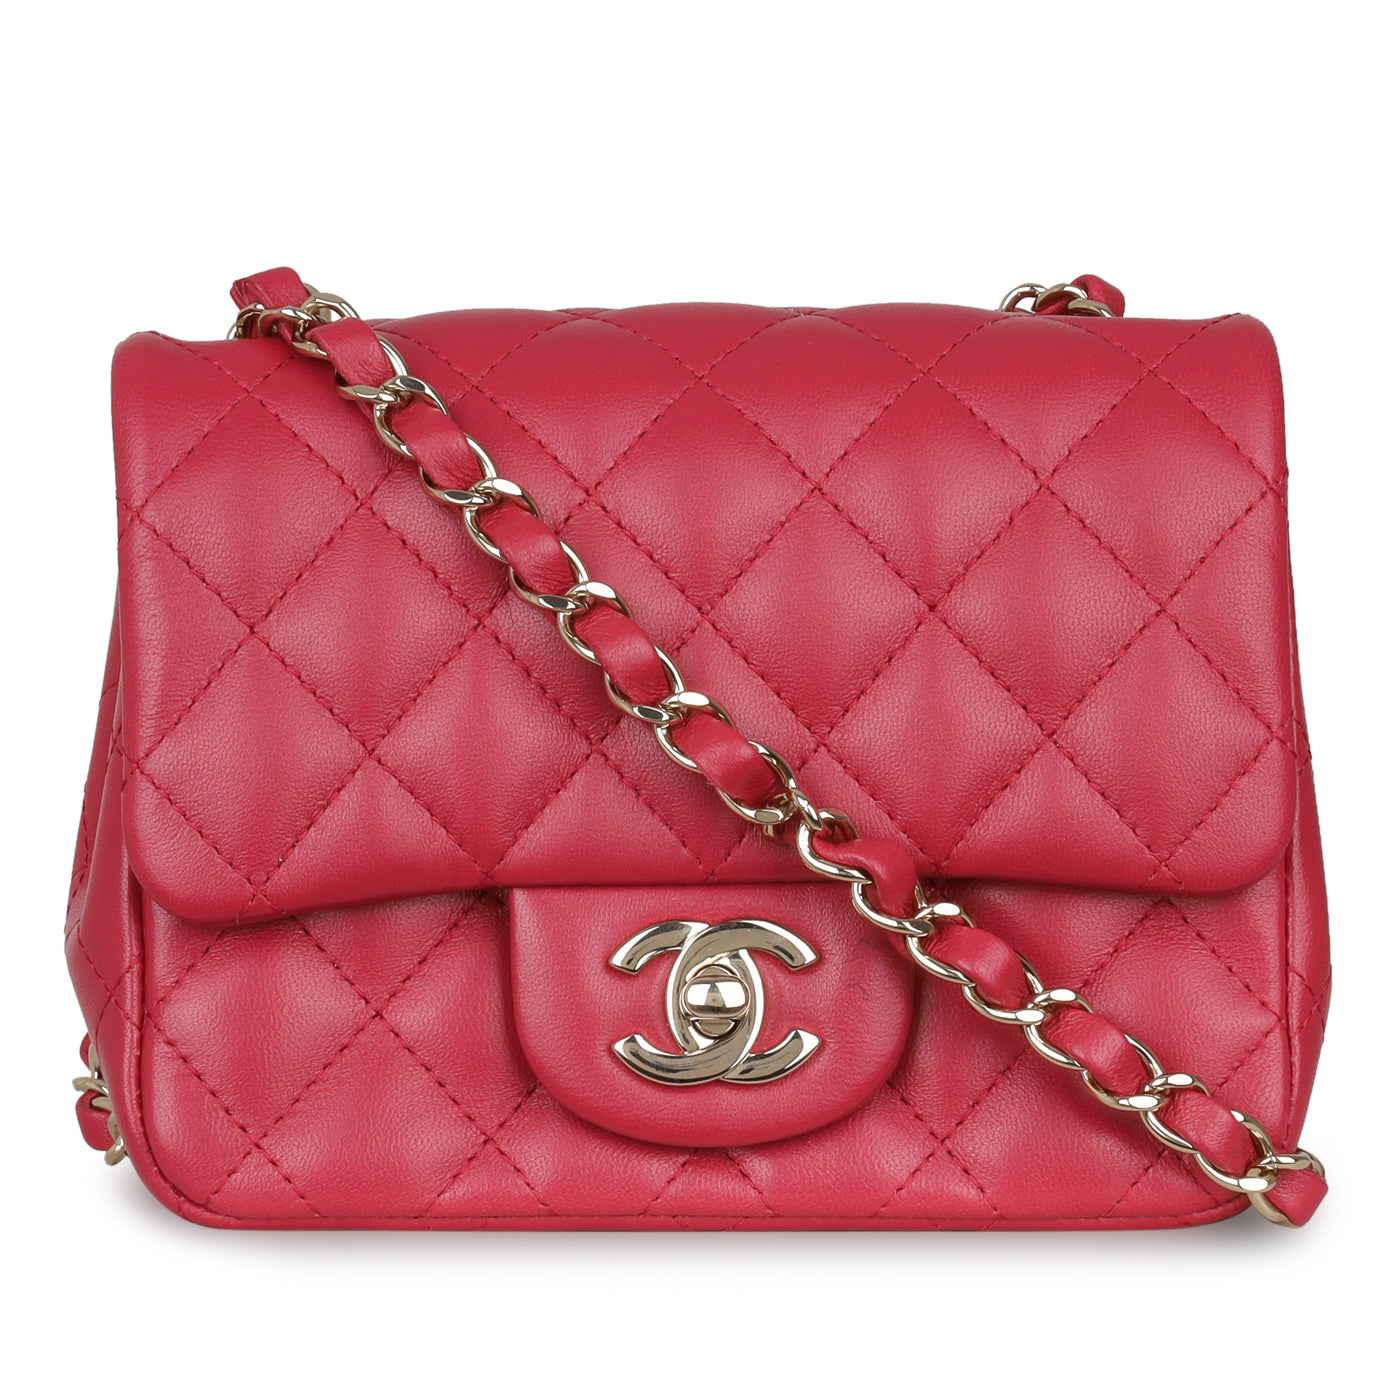 Chanel - Mini Square Classic Flap Bag - Raspberry Pink Caviar